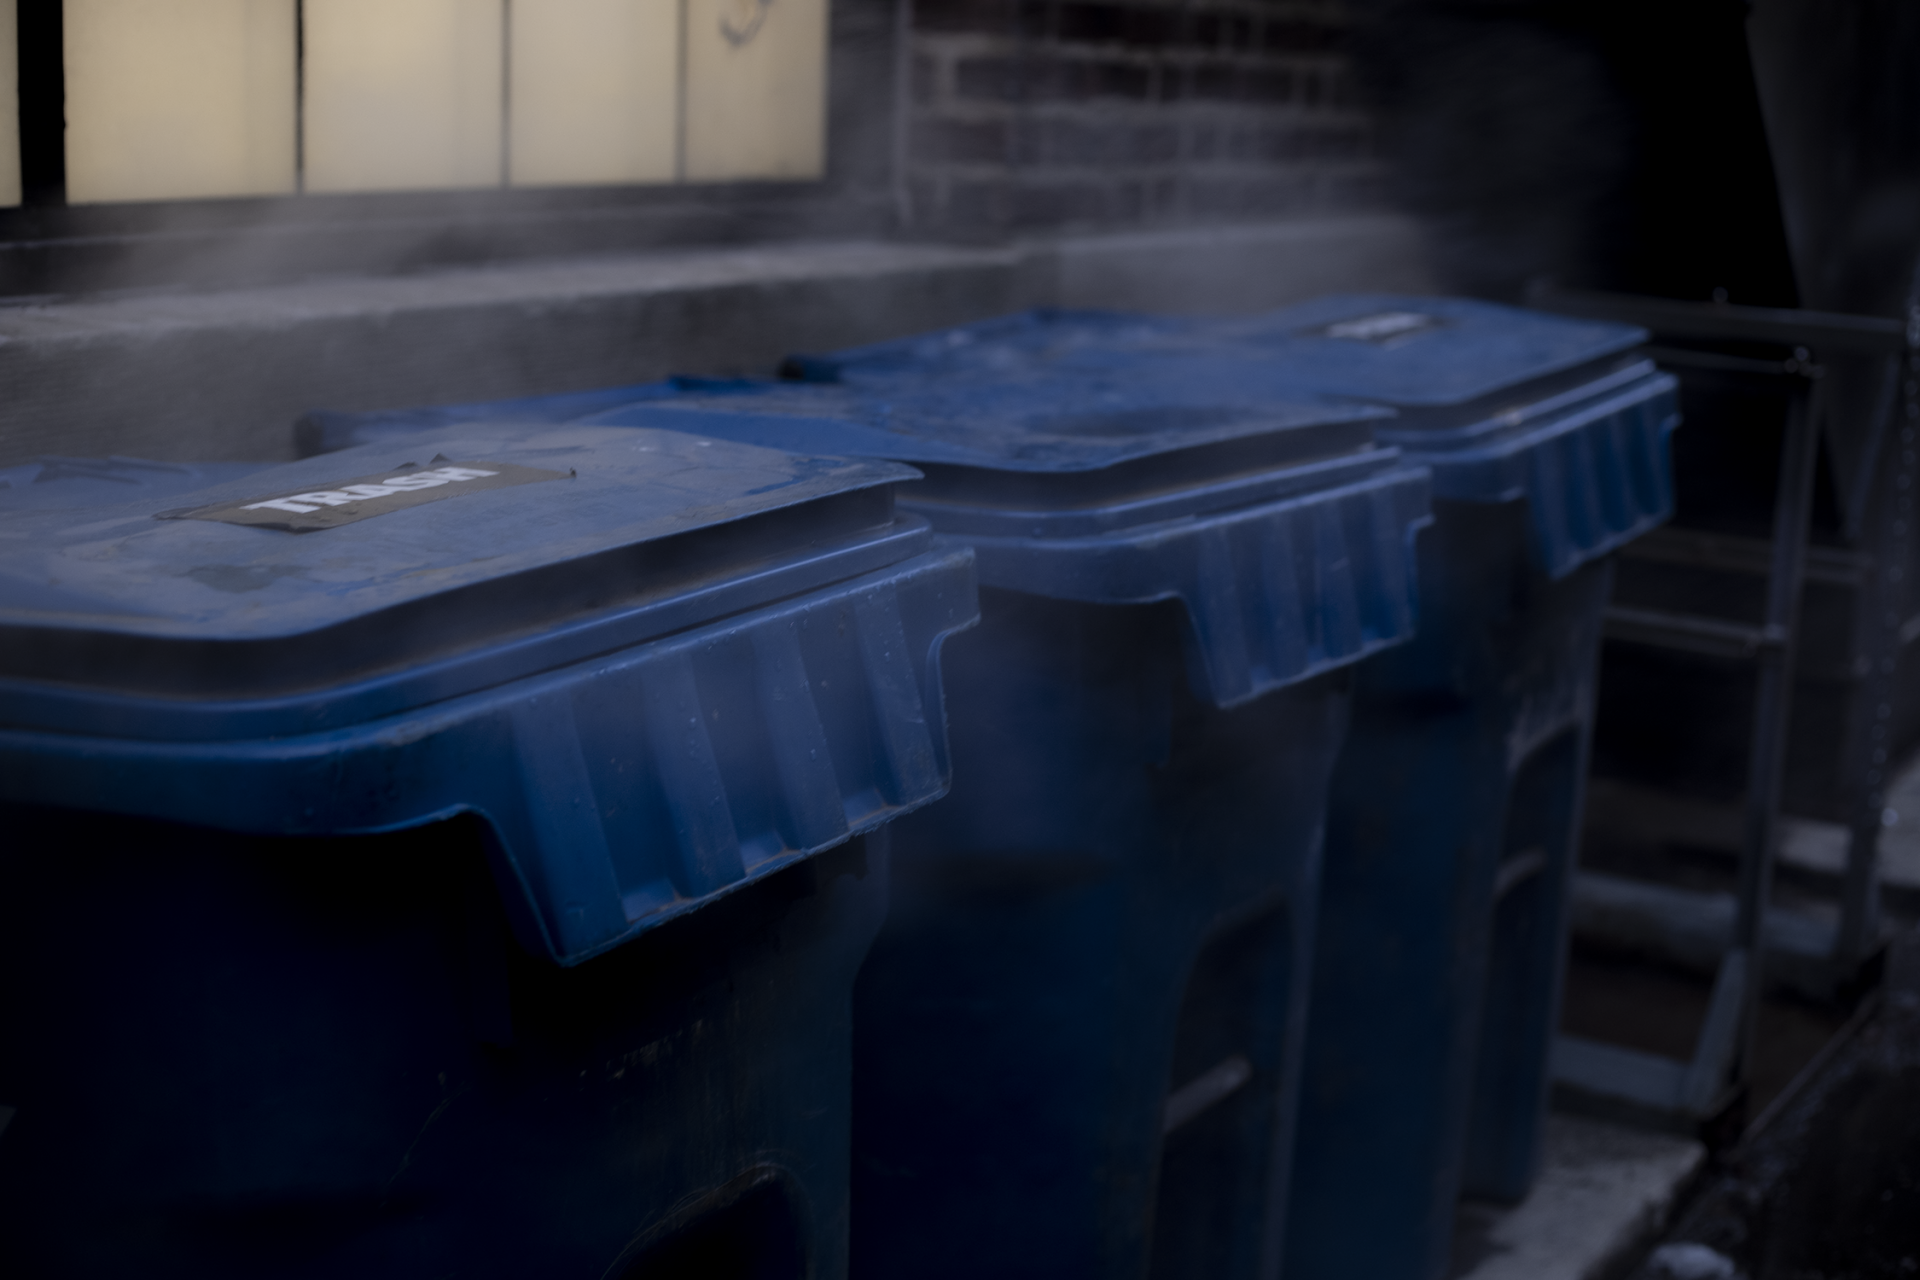 steam rises around three blue trash cans